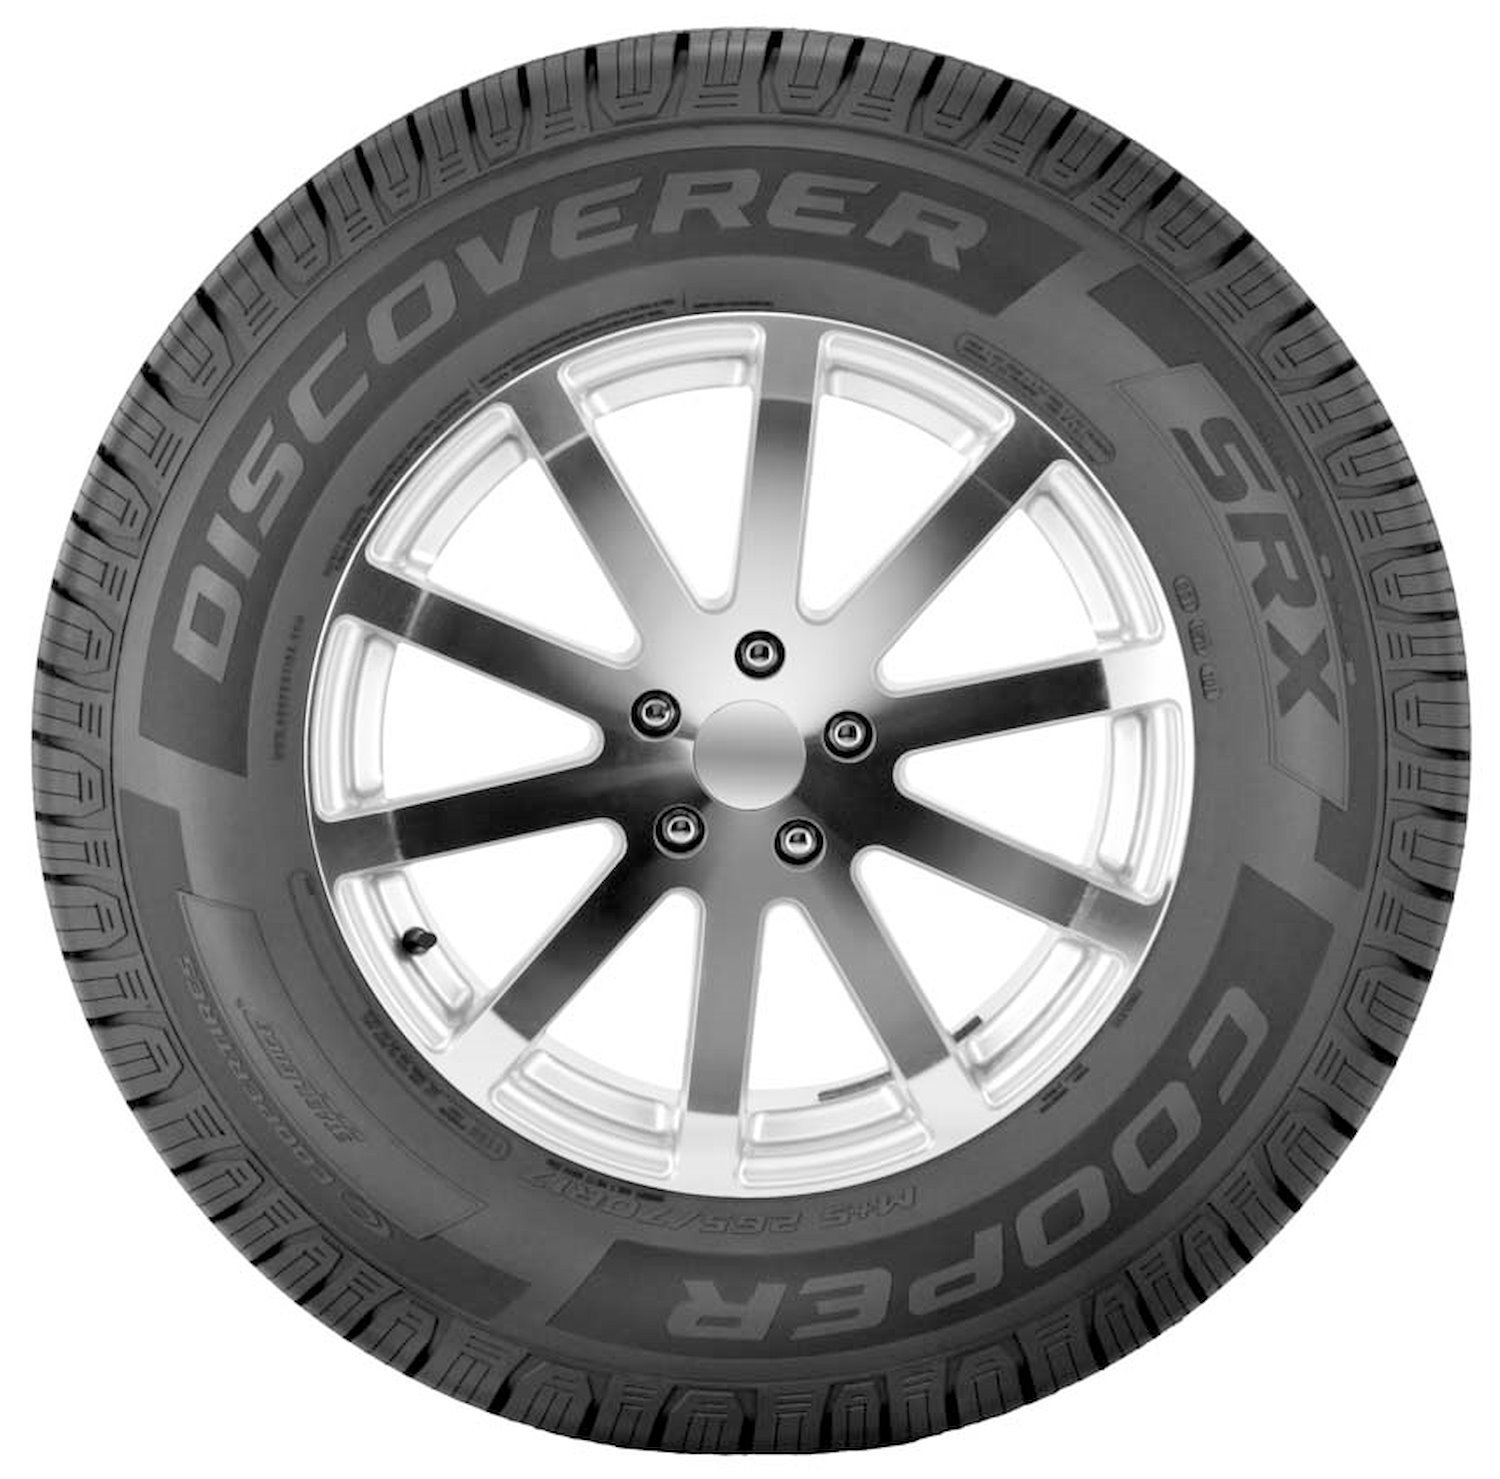 Discoverer SRX Commuter/Touring Tire, 255/55R18